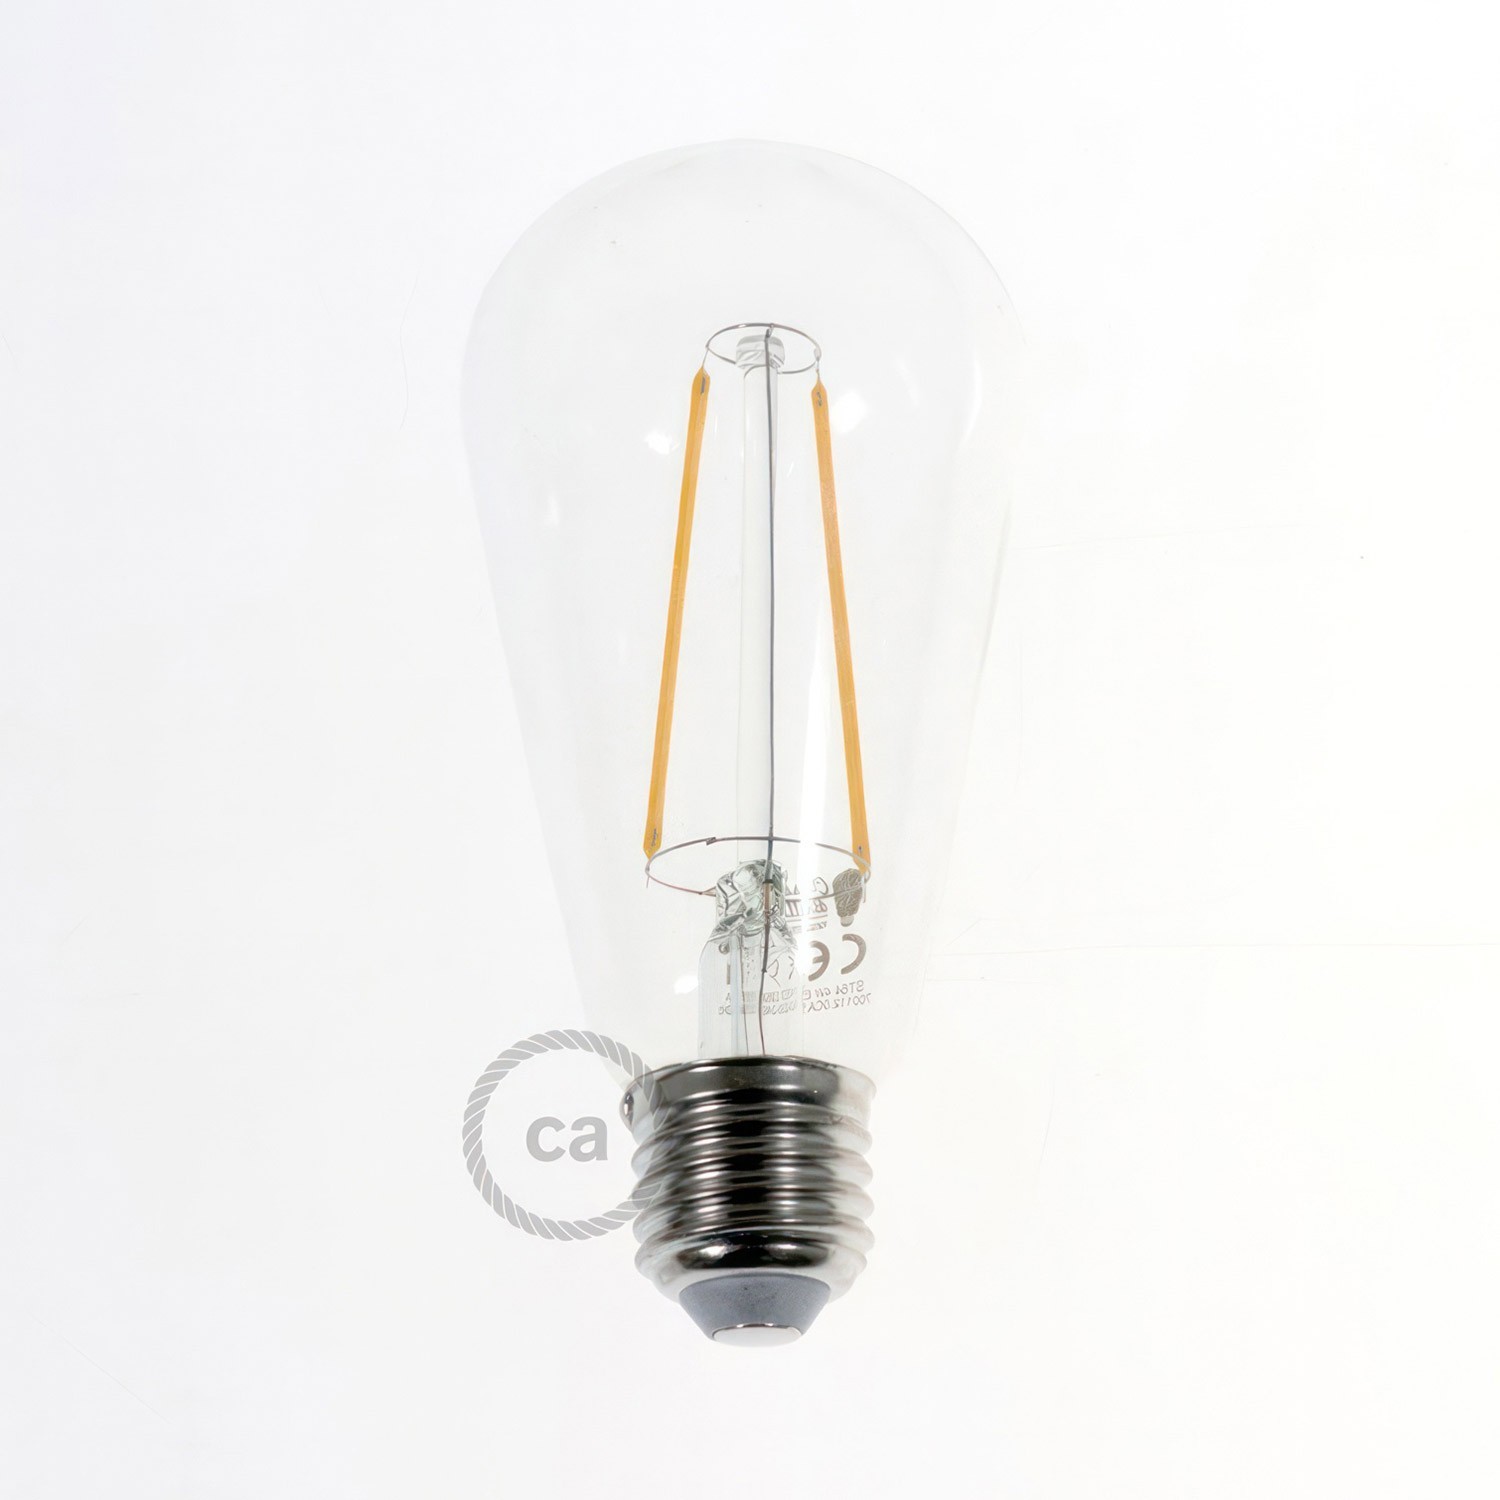 Fermaluce Metal 90°, adjustable metal wall flush light with Drop lampshade